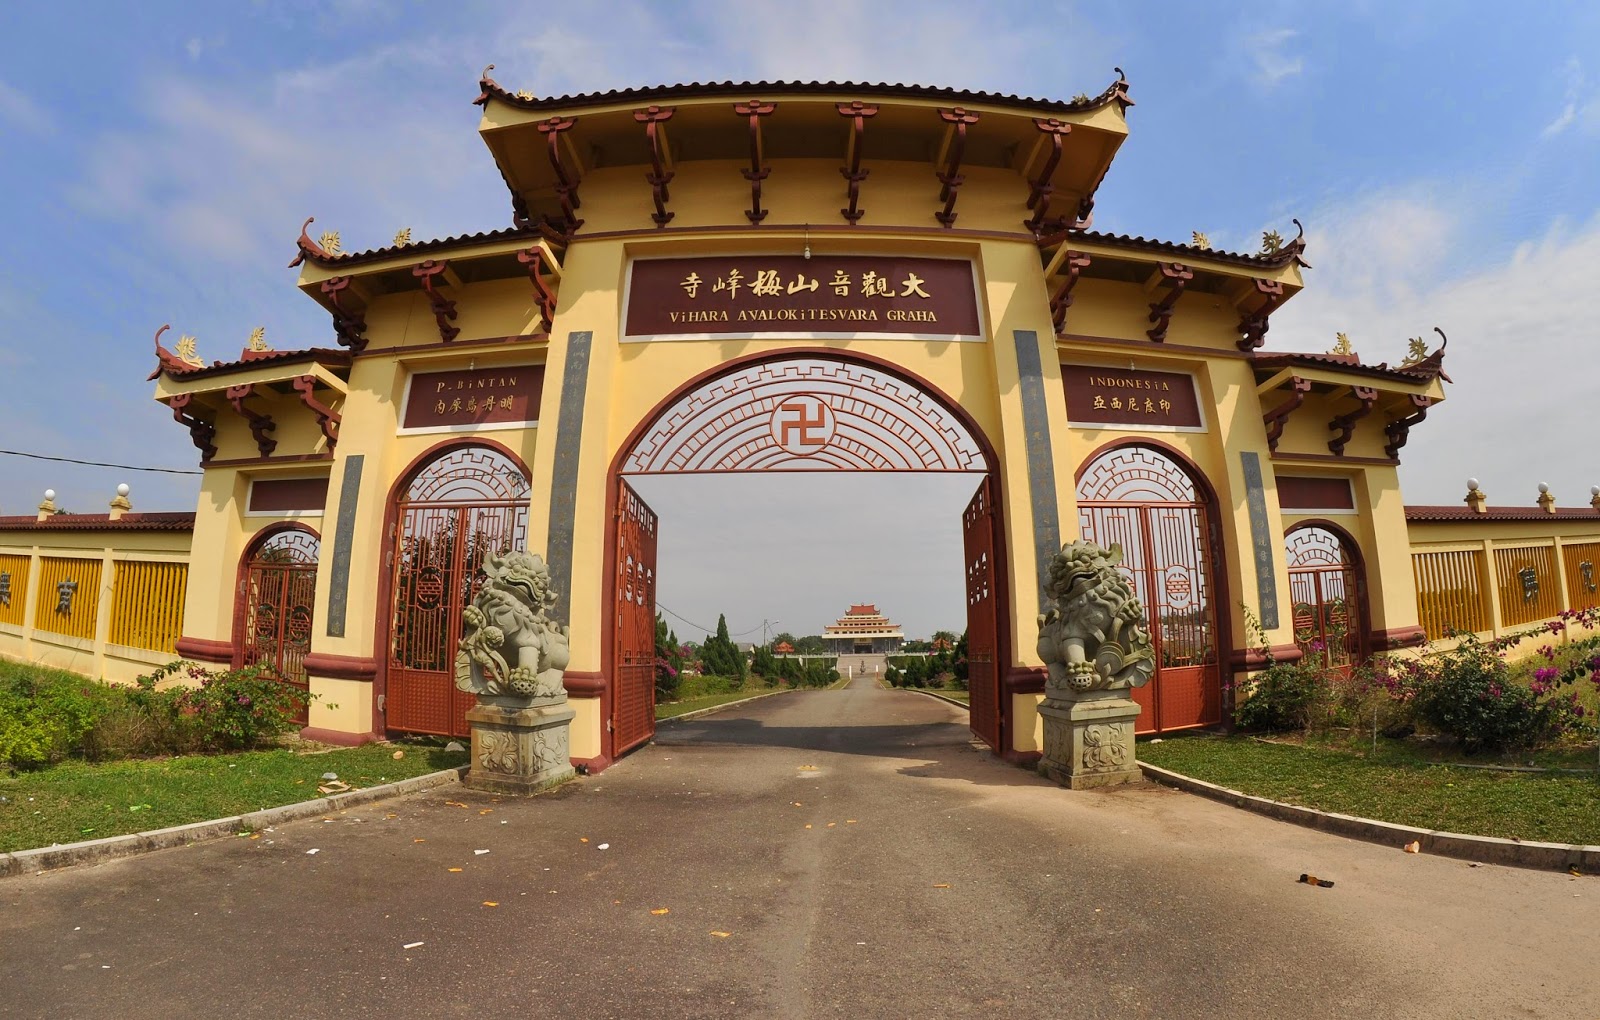 Sejarah Vihara Avalokitesvara Graha Tangerang Selatan